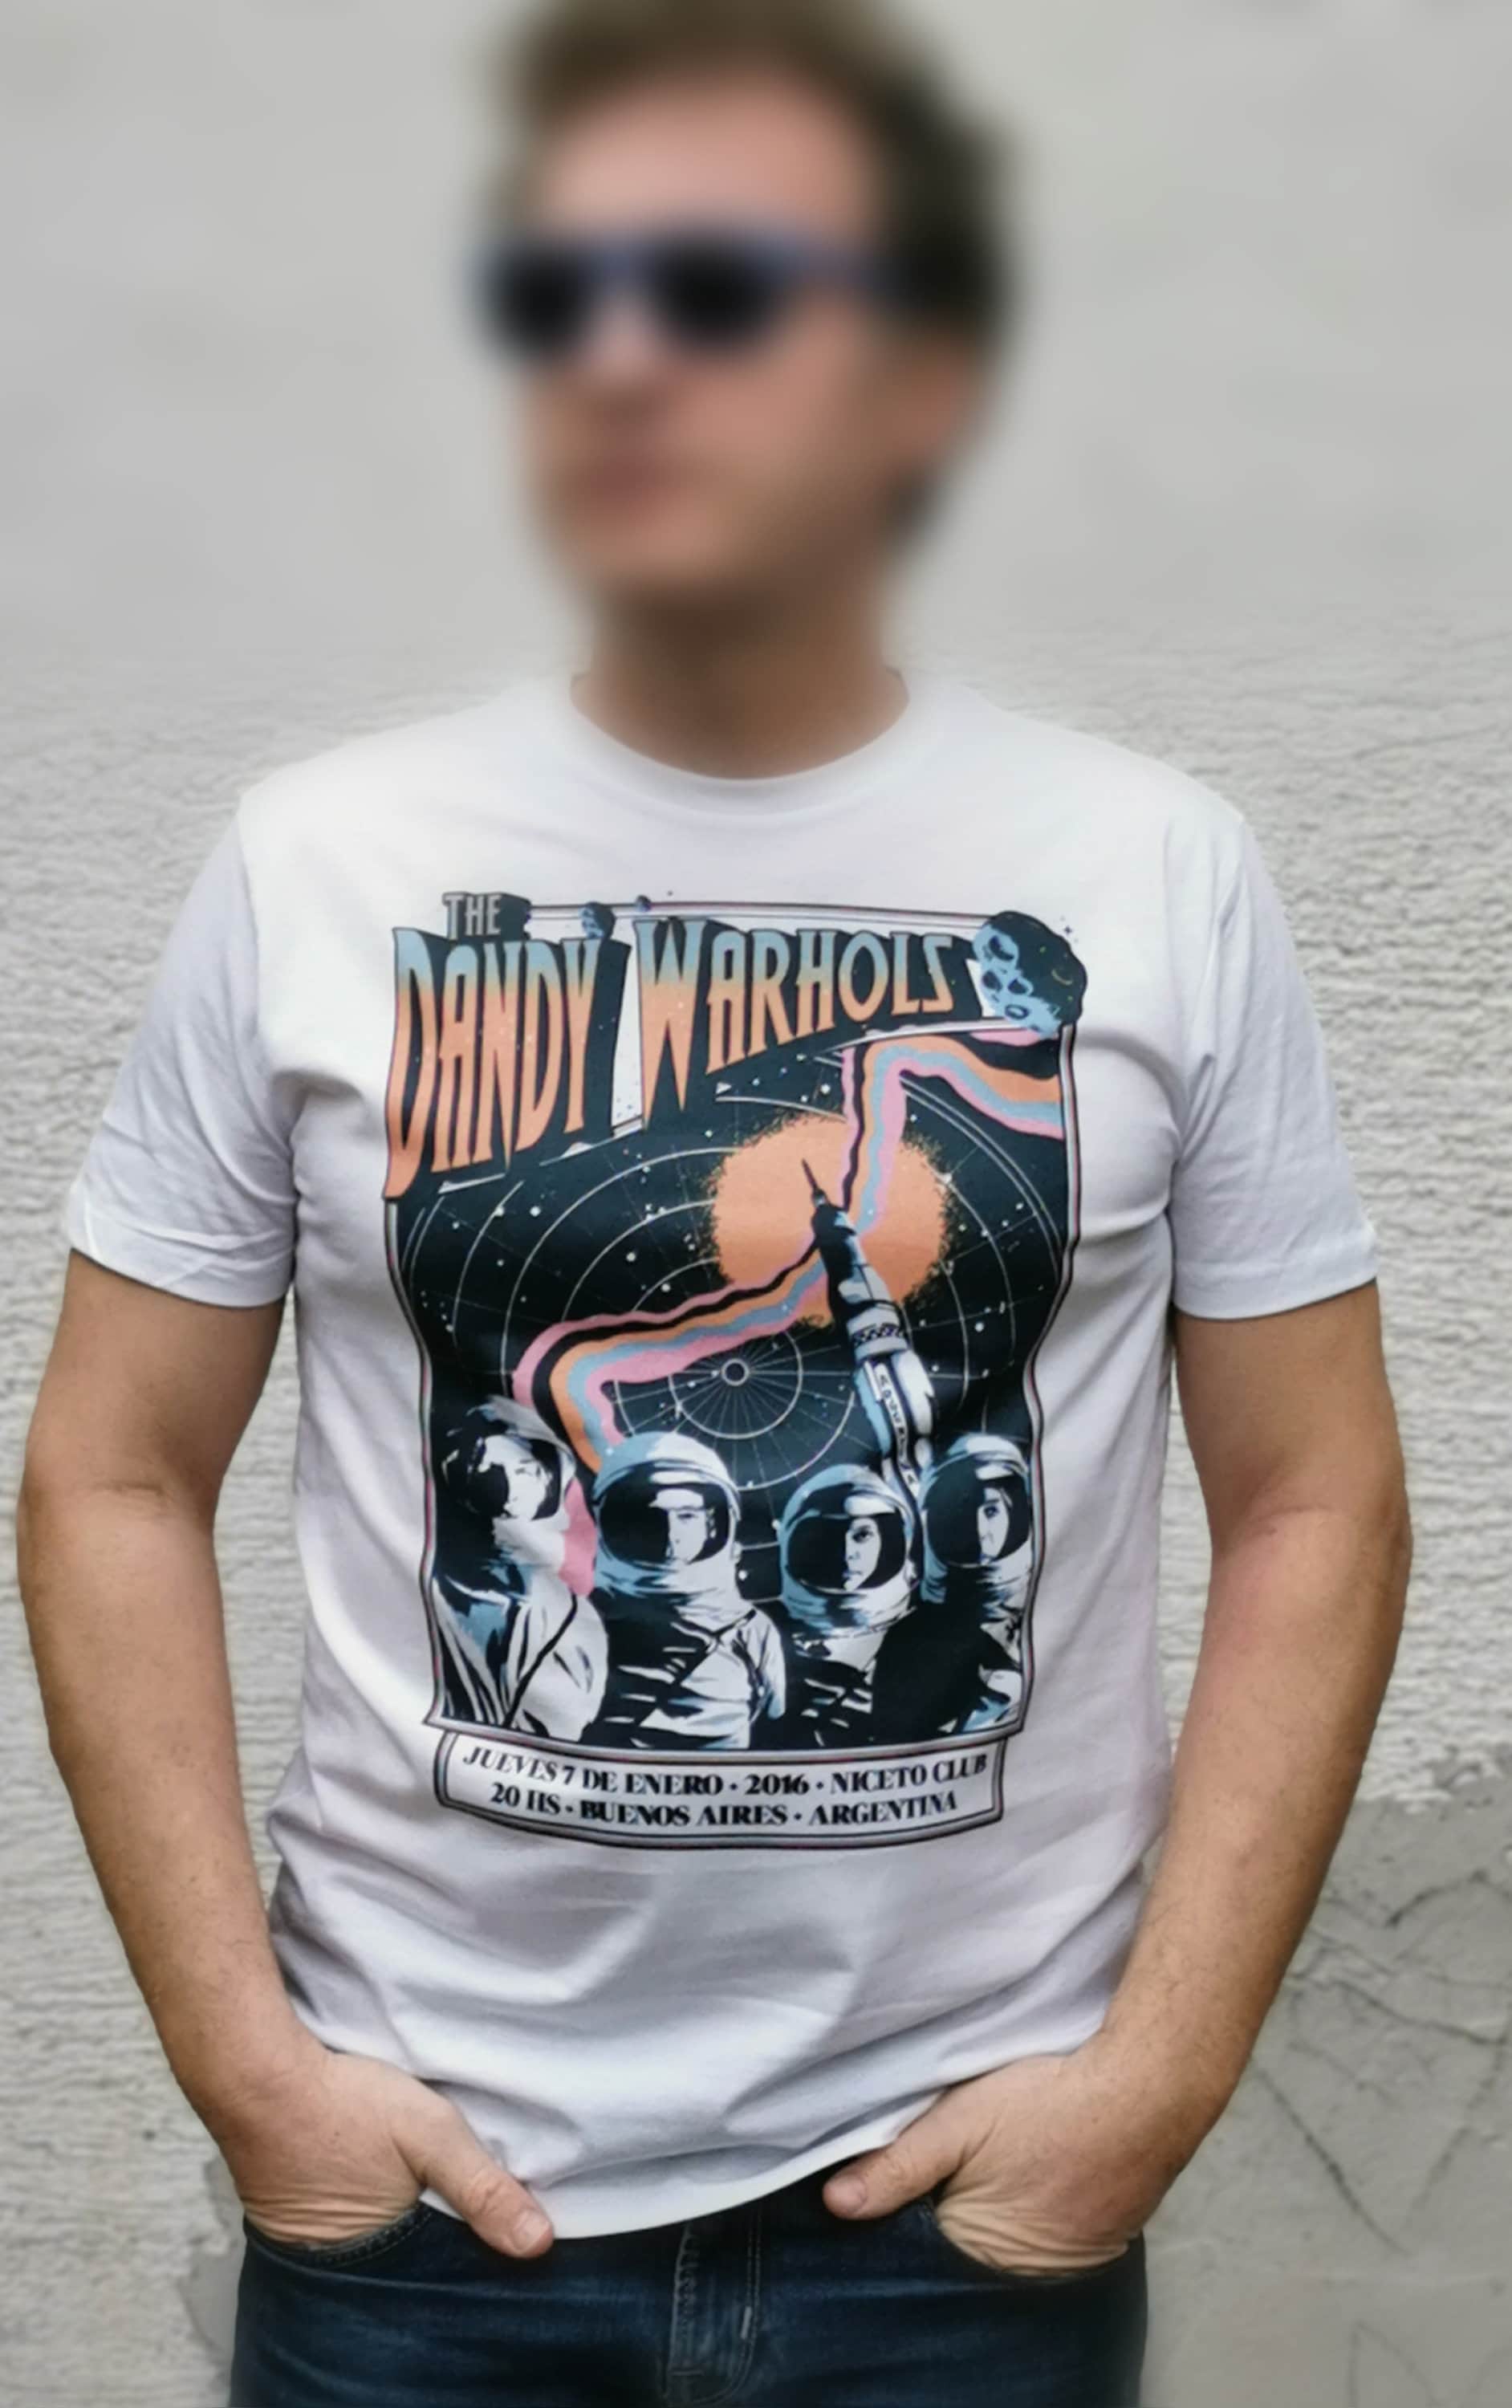 The Dandy Warhols T-shirt / Unique Handmade Cotton High